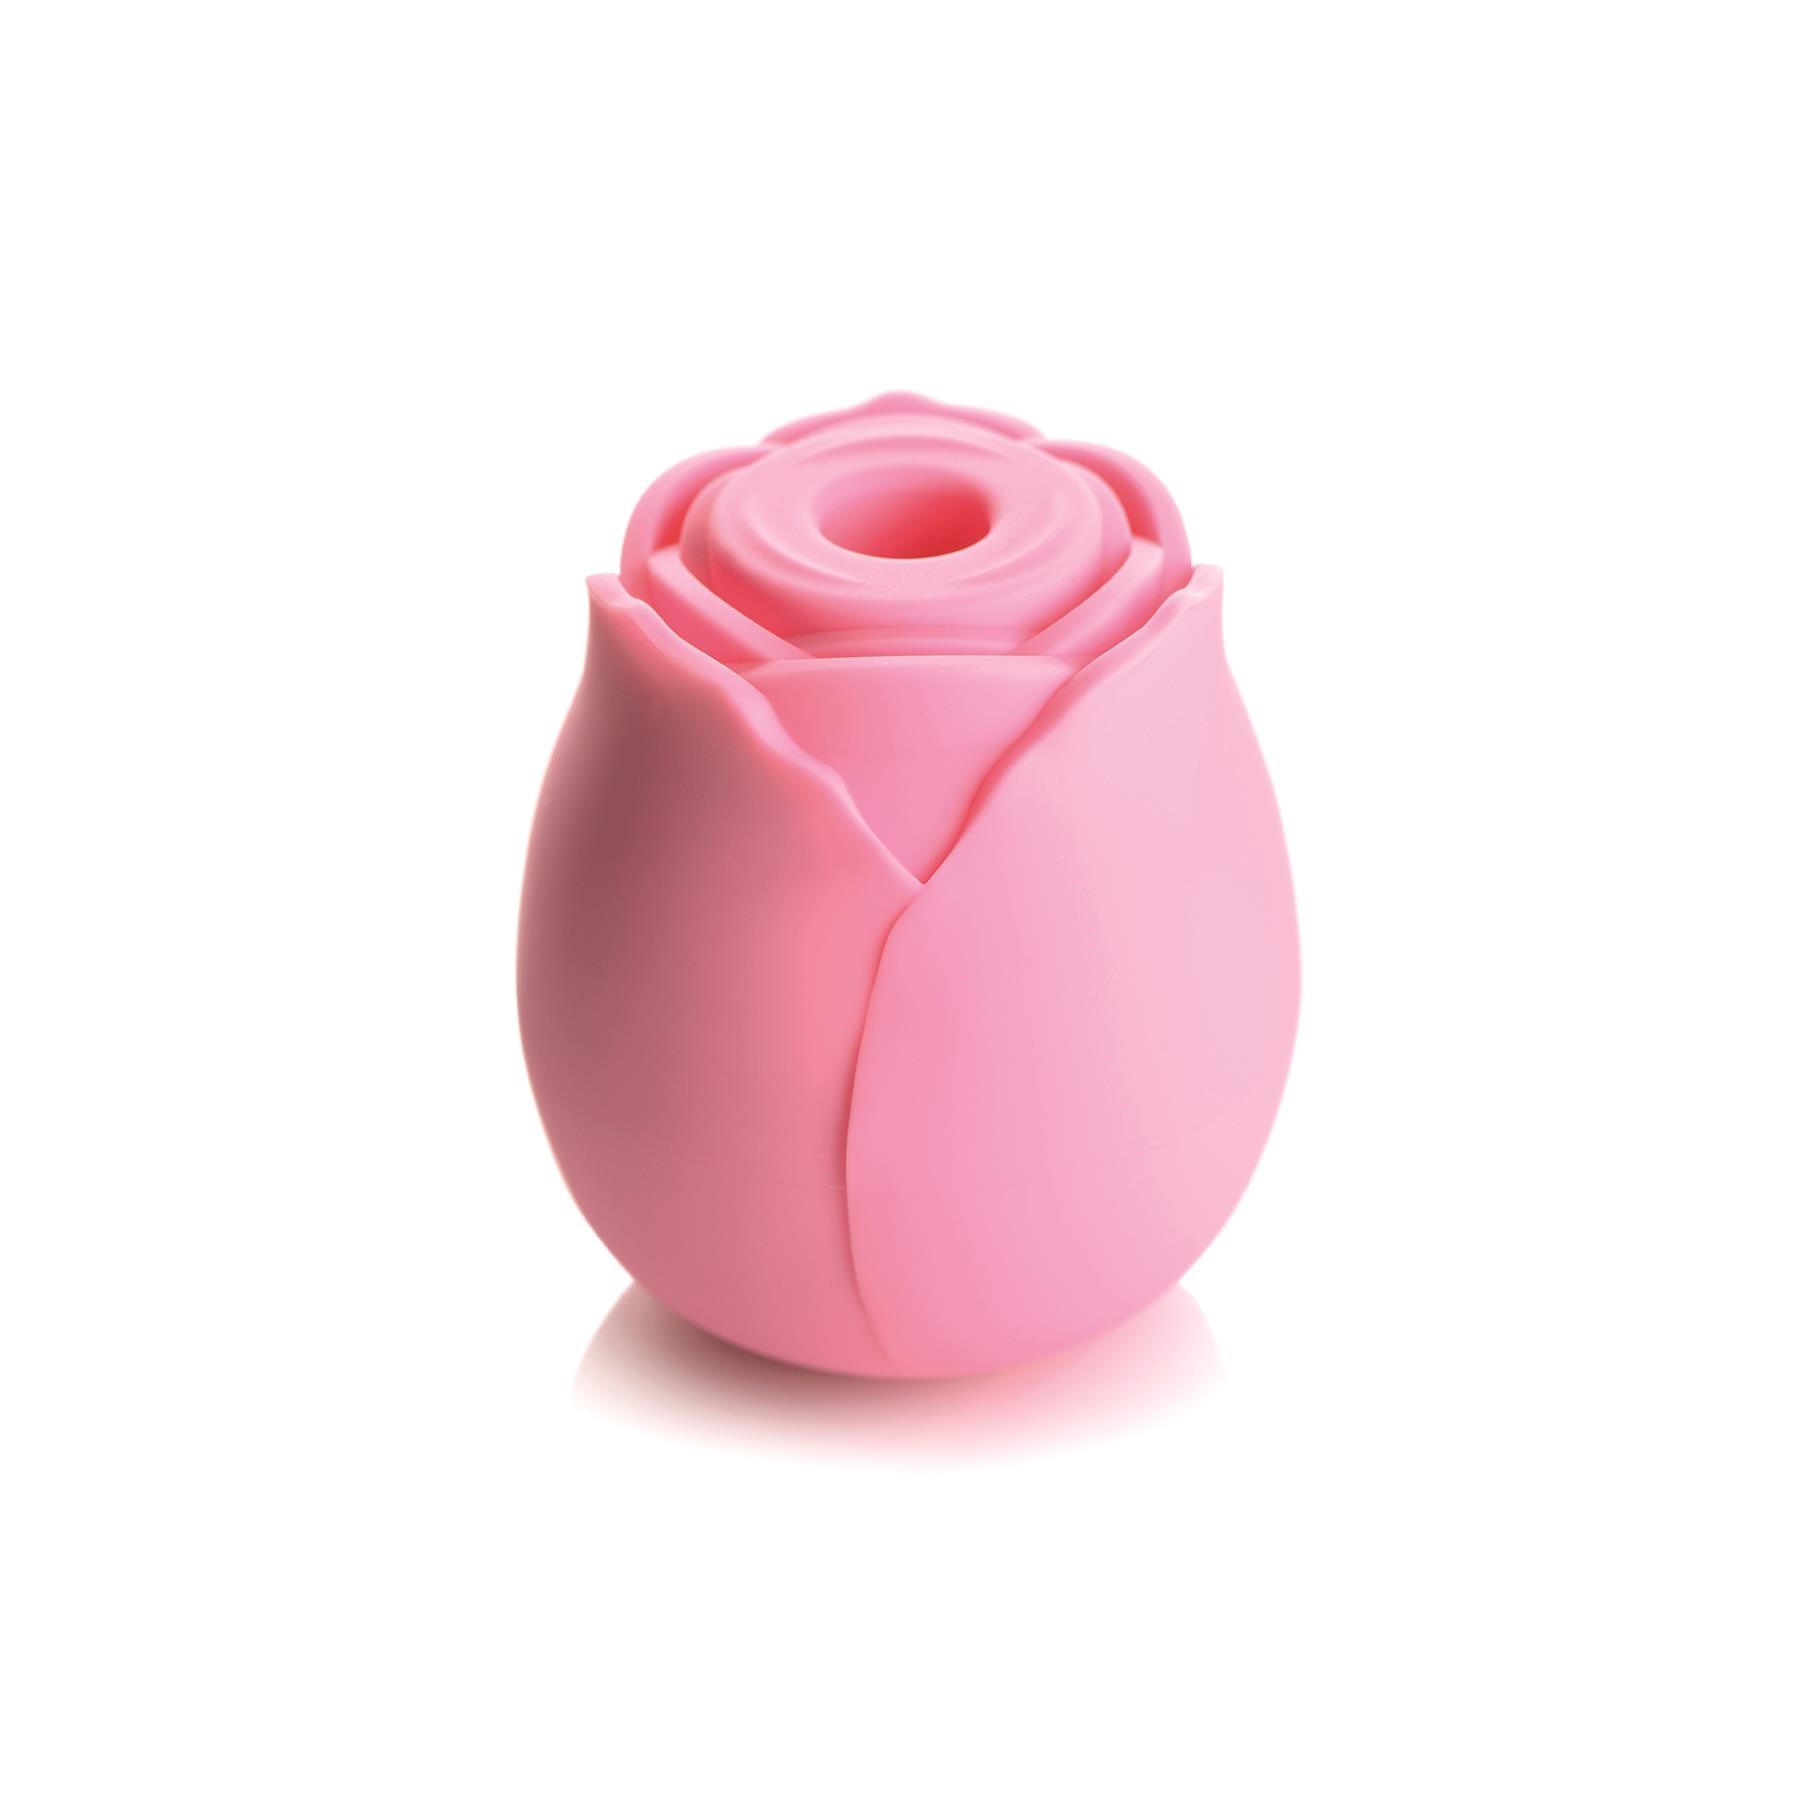 Bloomgasm Suction Rose Clitoral Stimulator Upright Product Shot #1 - Pink